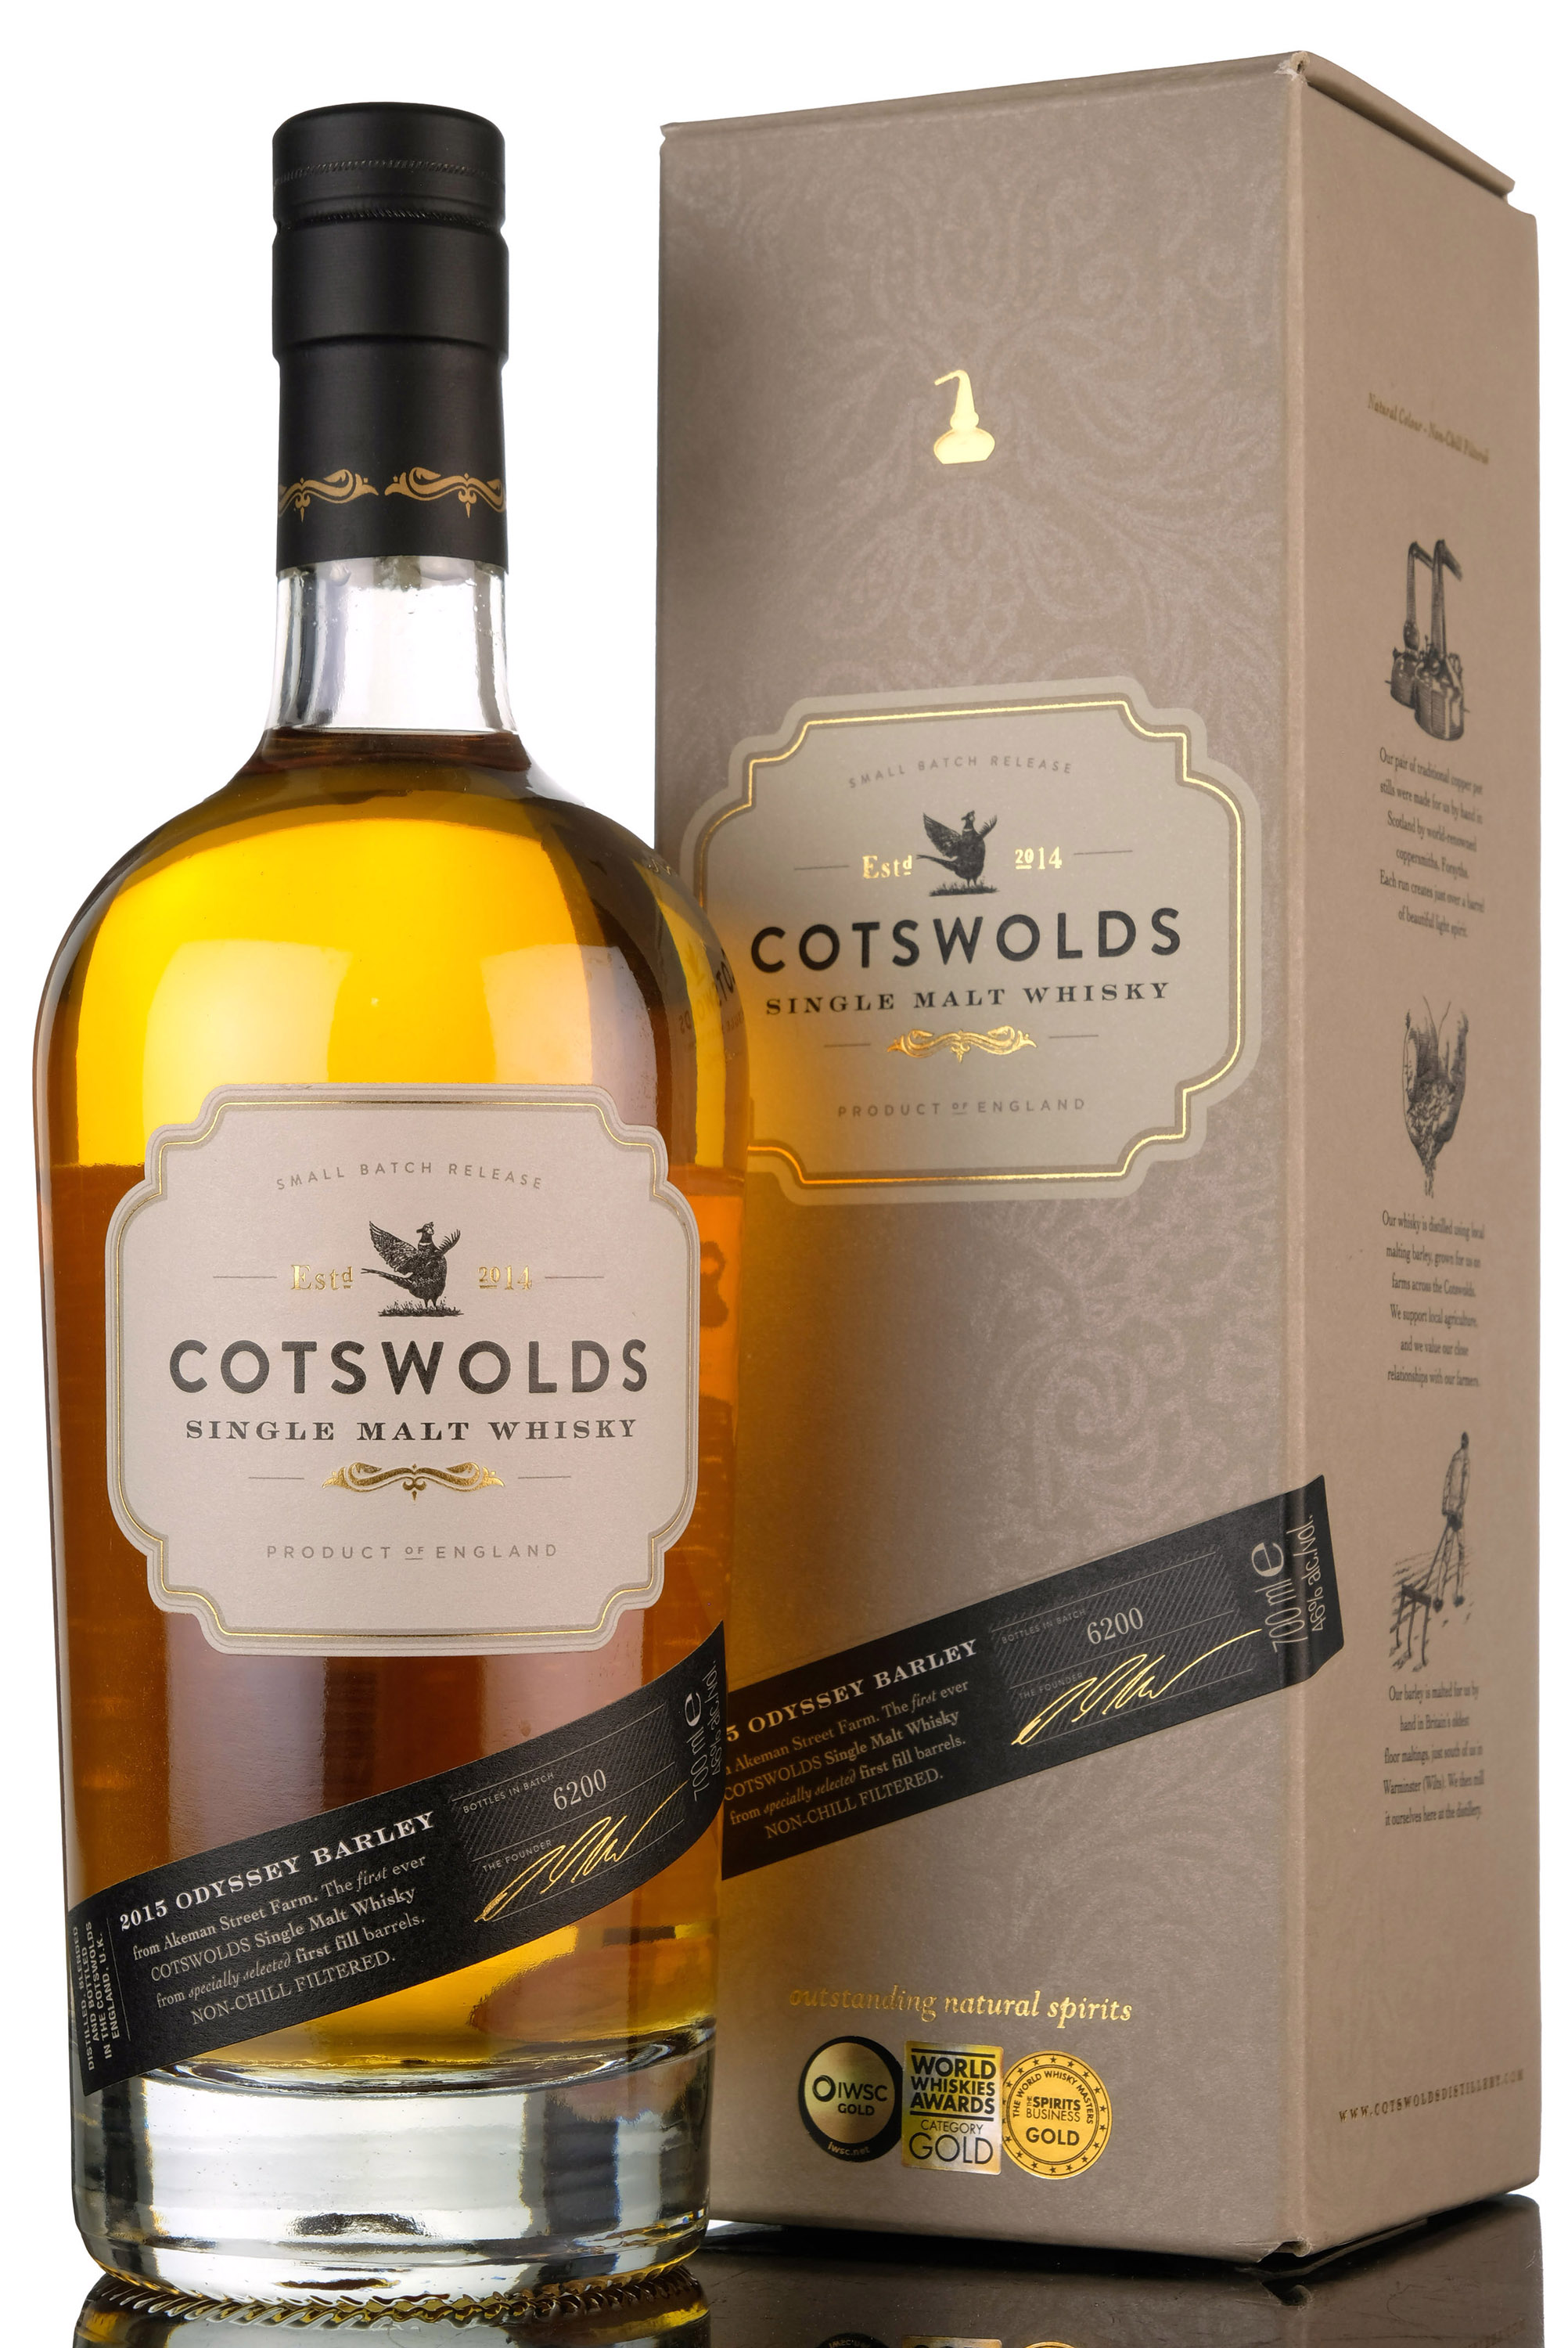 Cotswolds 2015 - Odyssey Barley